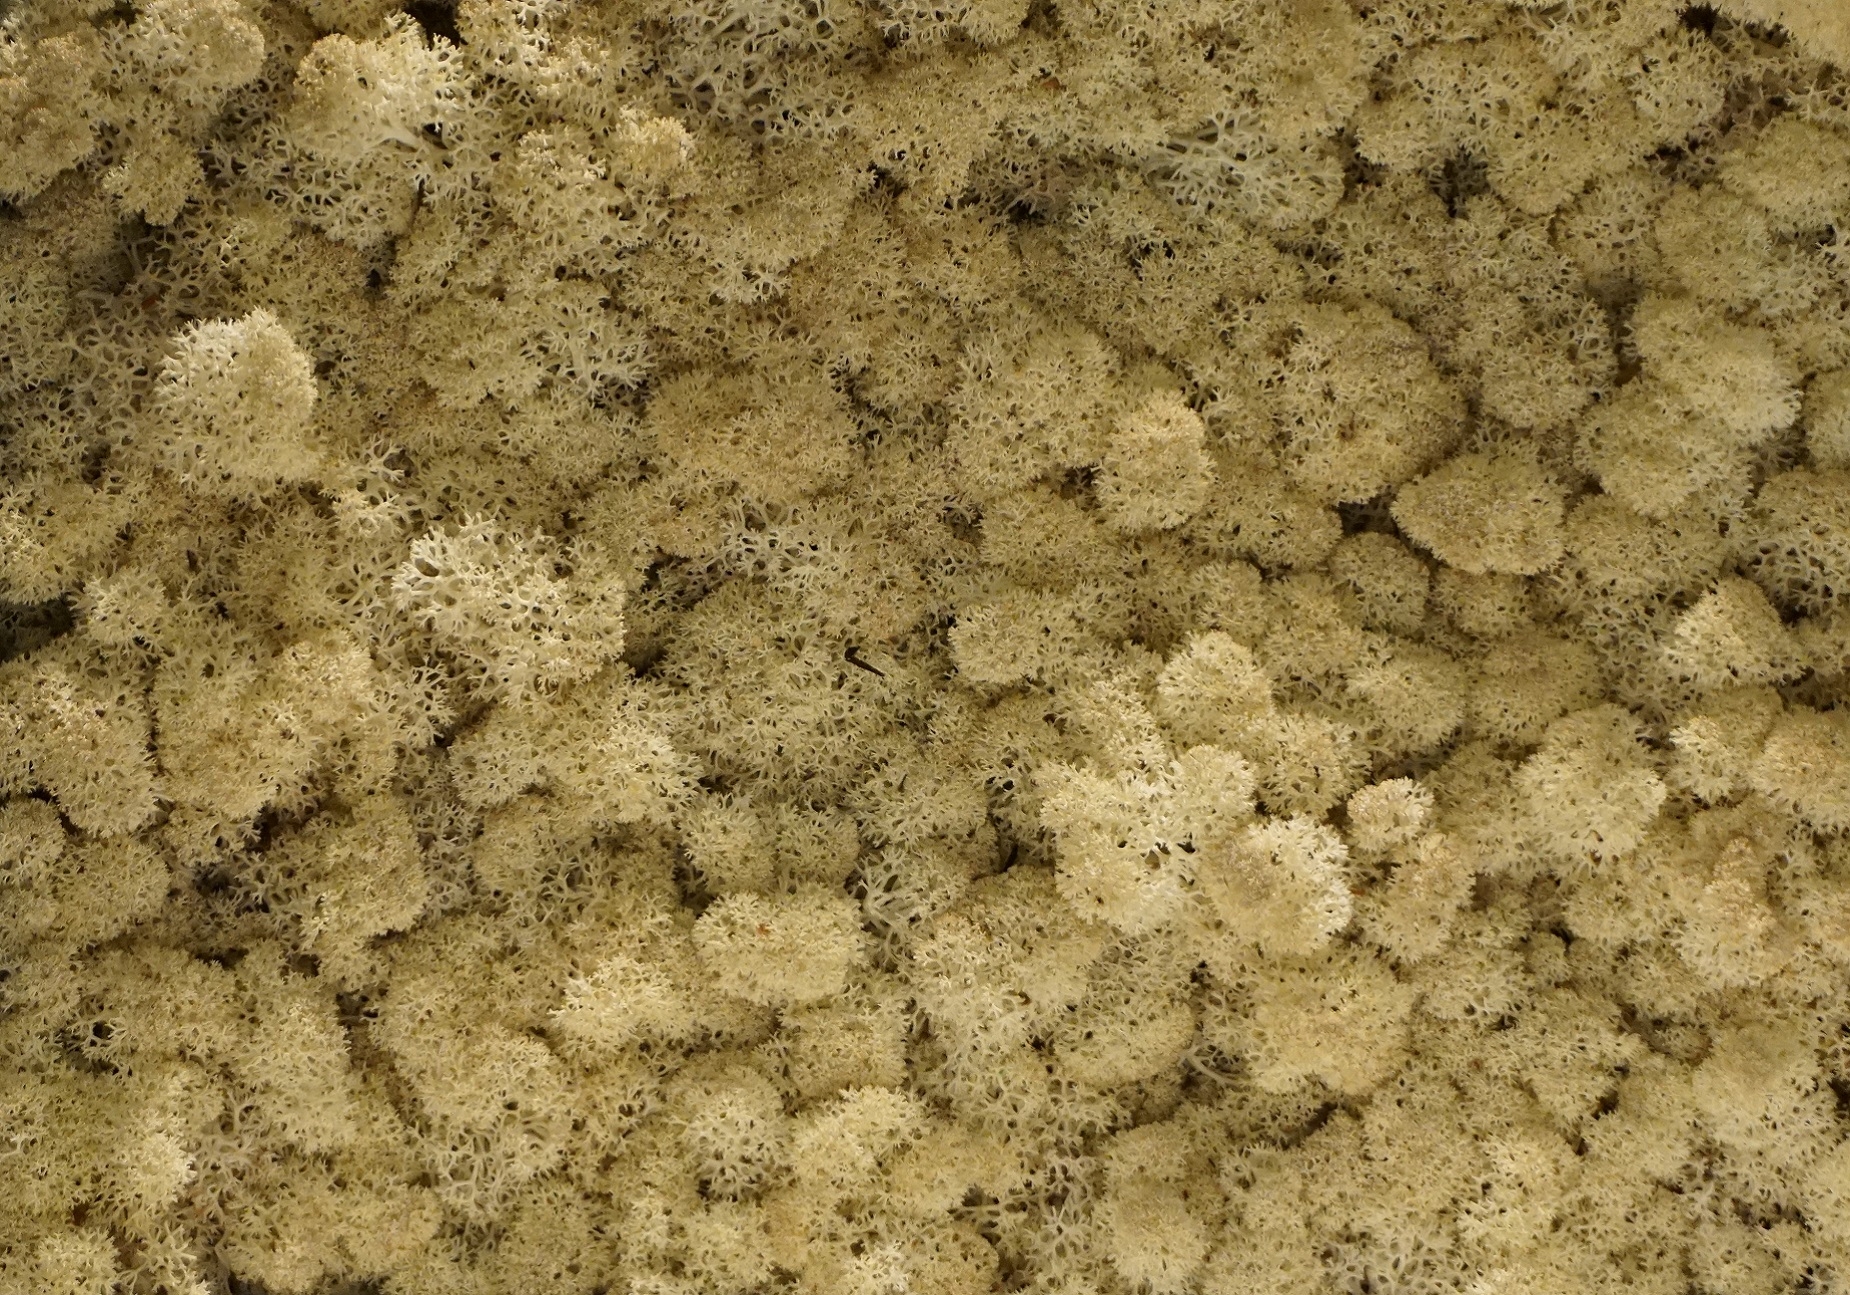 Torvtak orgaisch naturel icemoss uit de Tundra moss collectie